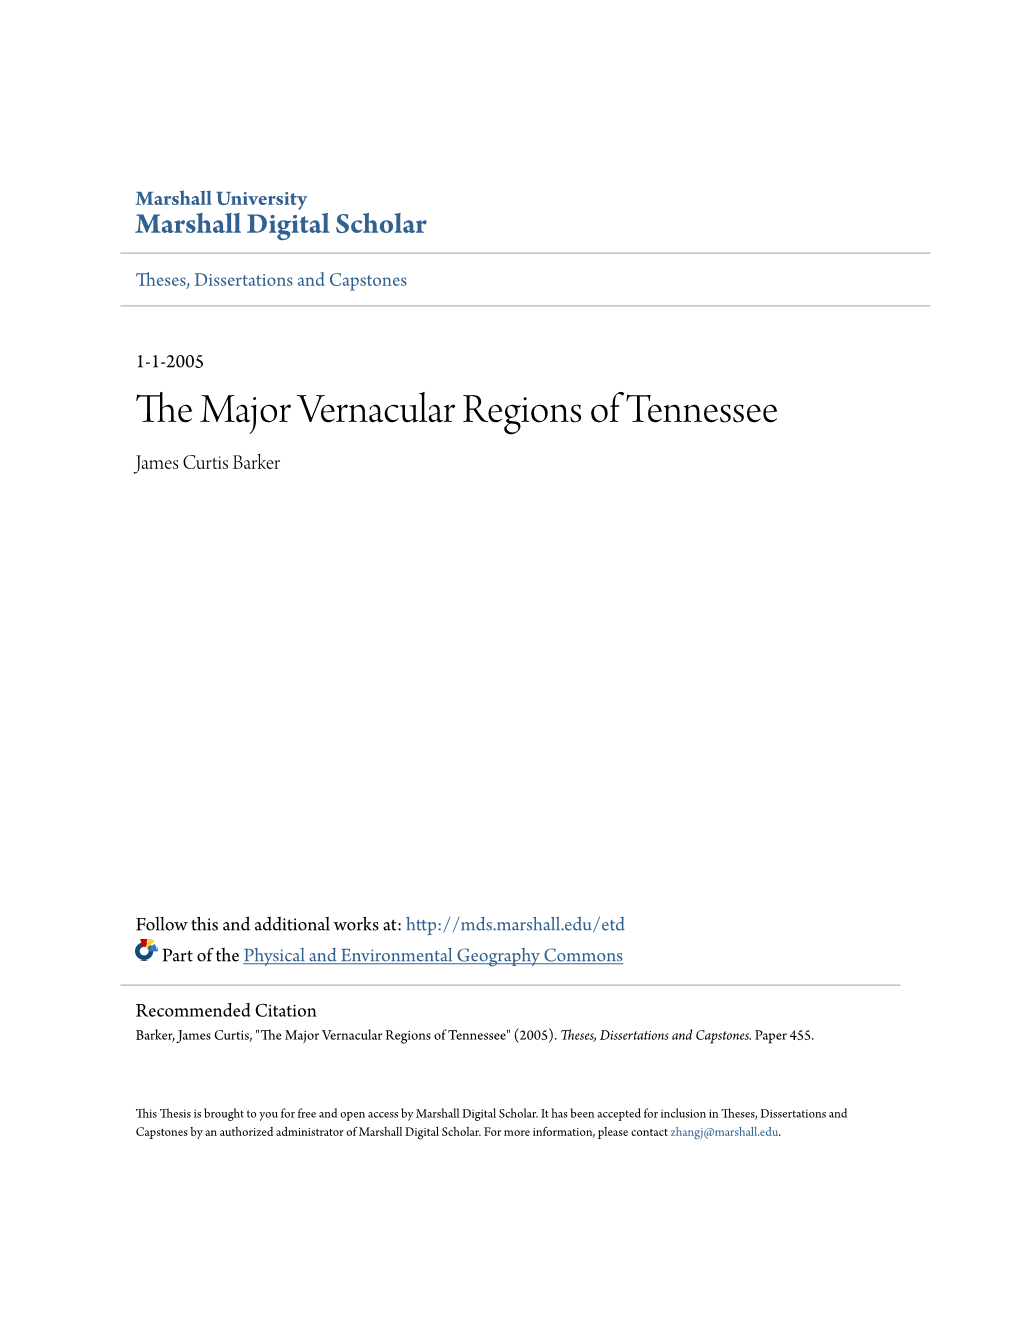 The Major Vernacular Regions of Tennessee